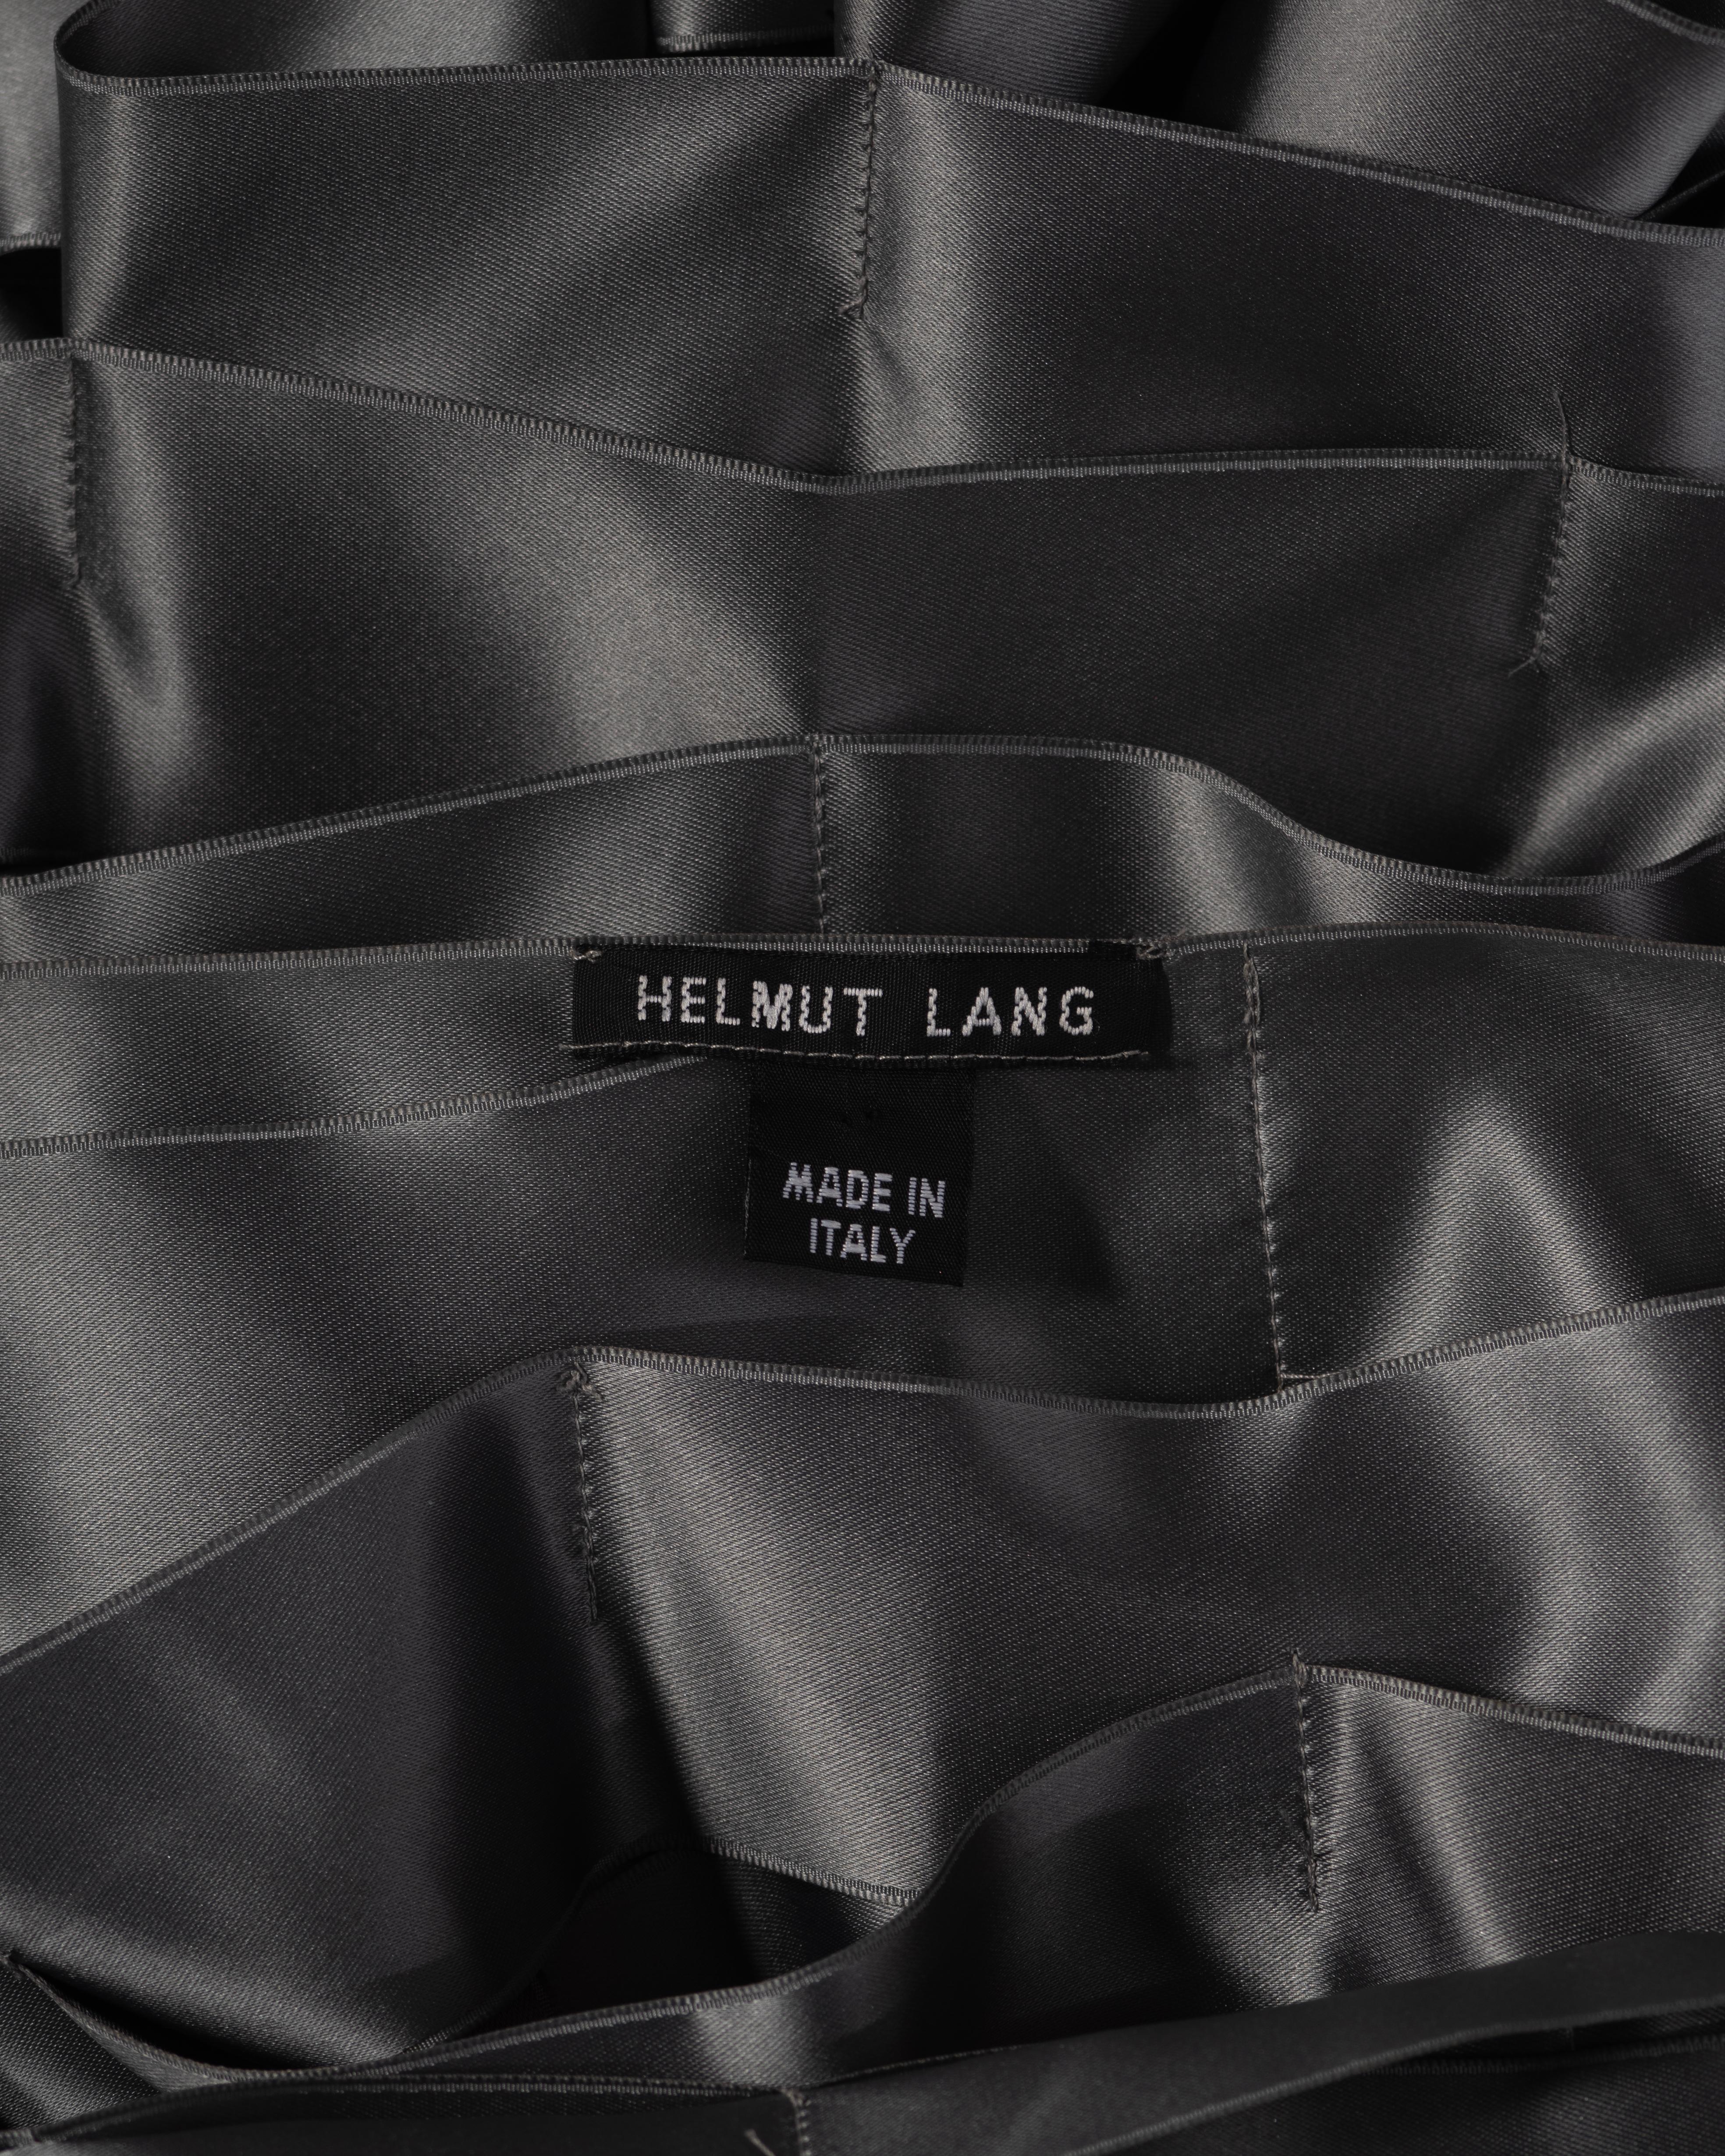 Helmut Lang Gunmetal Satin Ribbon Dress, ss 1998 For Sale 16